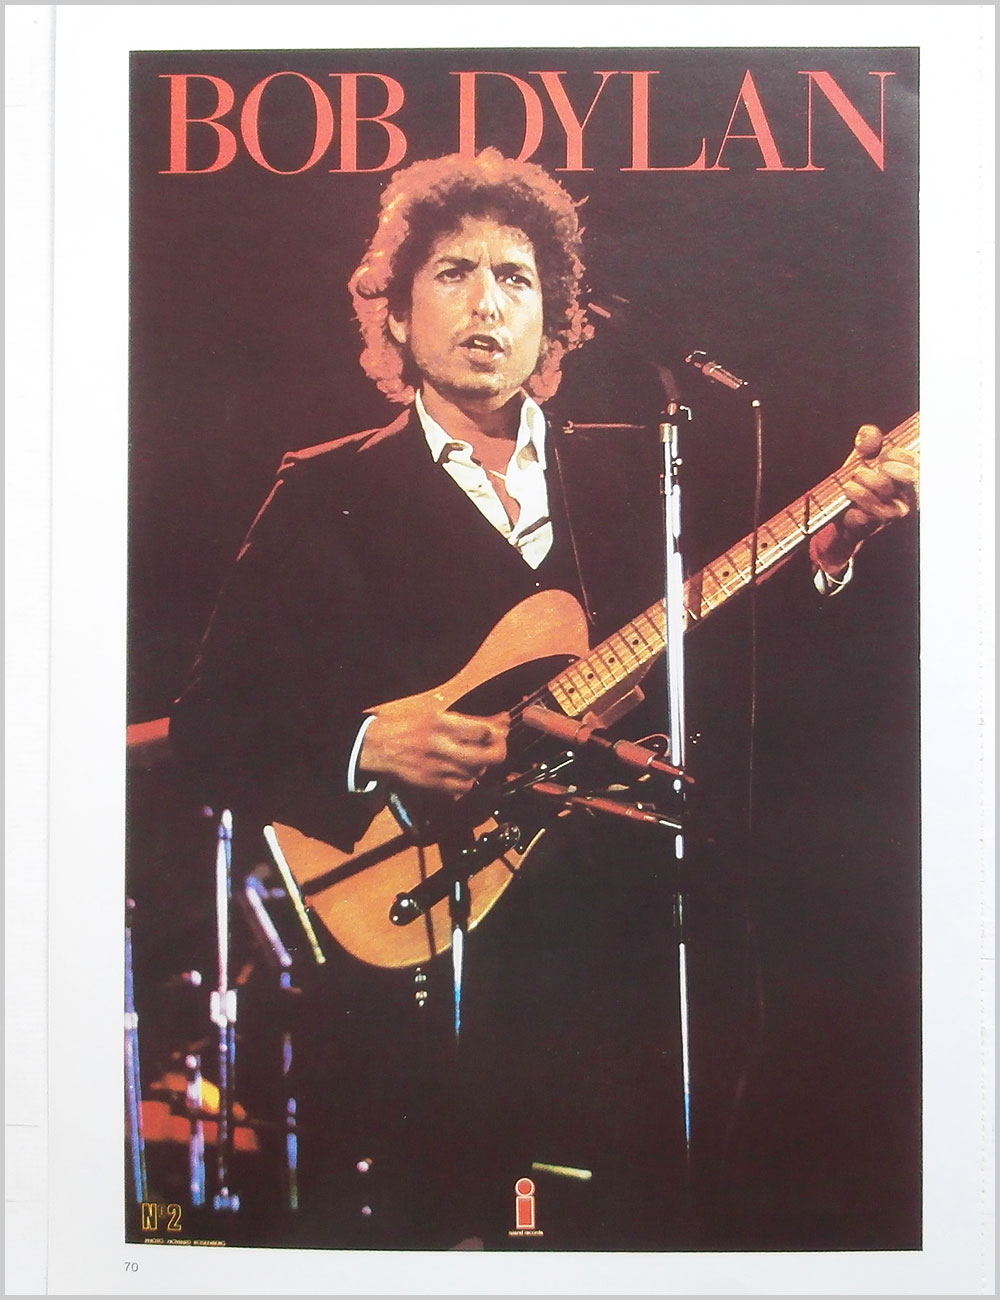 Bob Dylan and The Who - Rock Poster: Bob Dylan b/w The Who: Quadrophenia  (PB100304) 